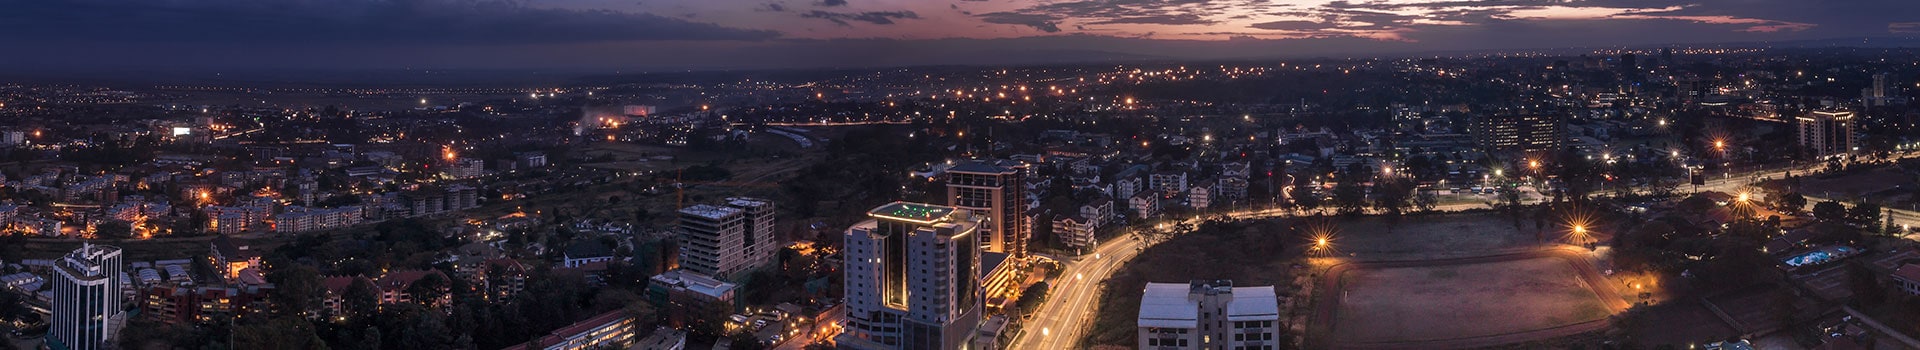 Bolonia - Nairobi